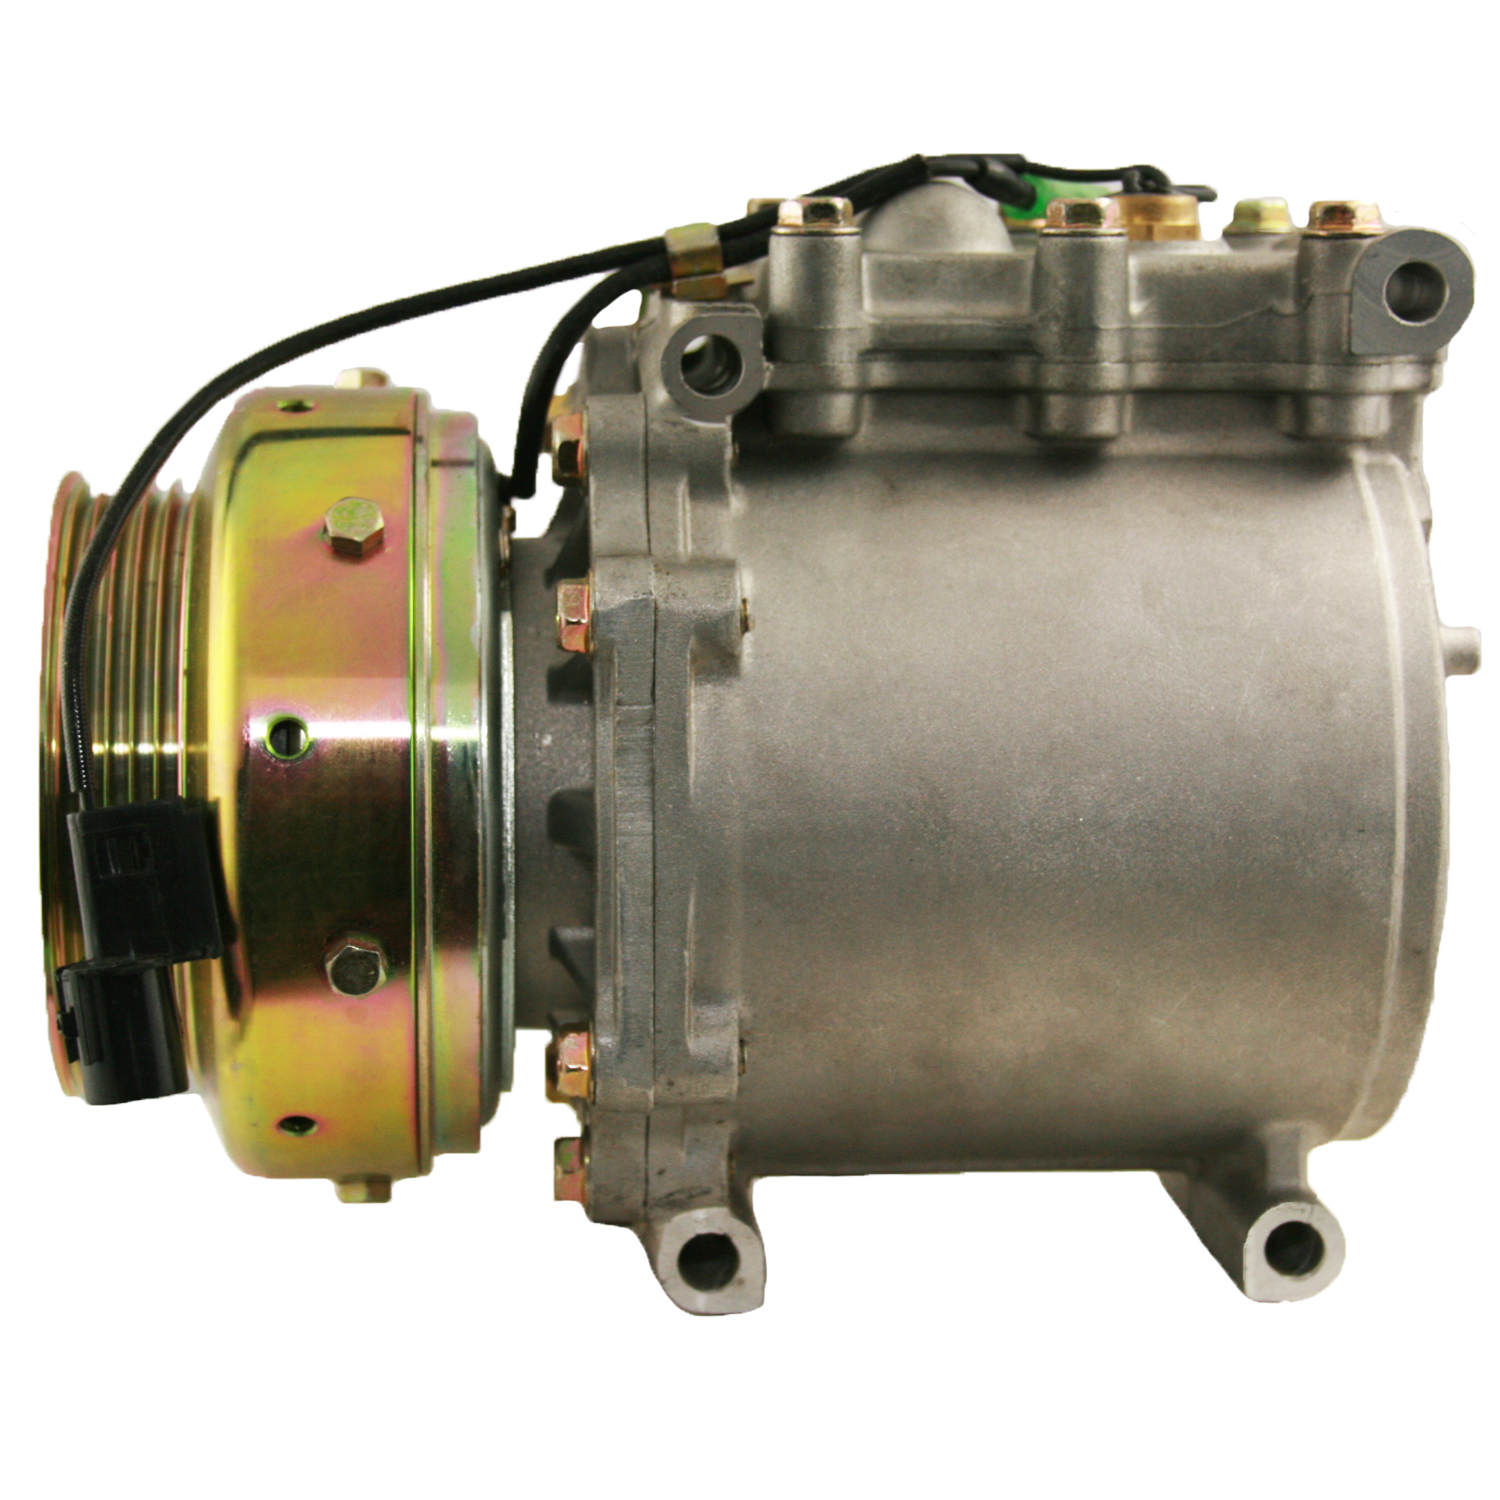 TCW Compressor 24150.501NEW New Product Image field_60b6a13a6e67c